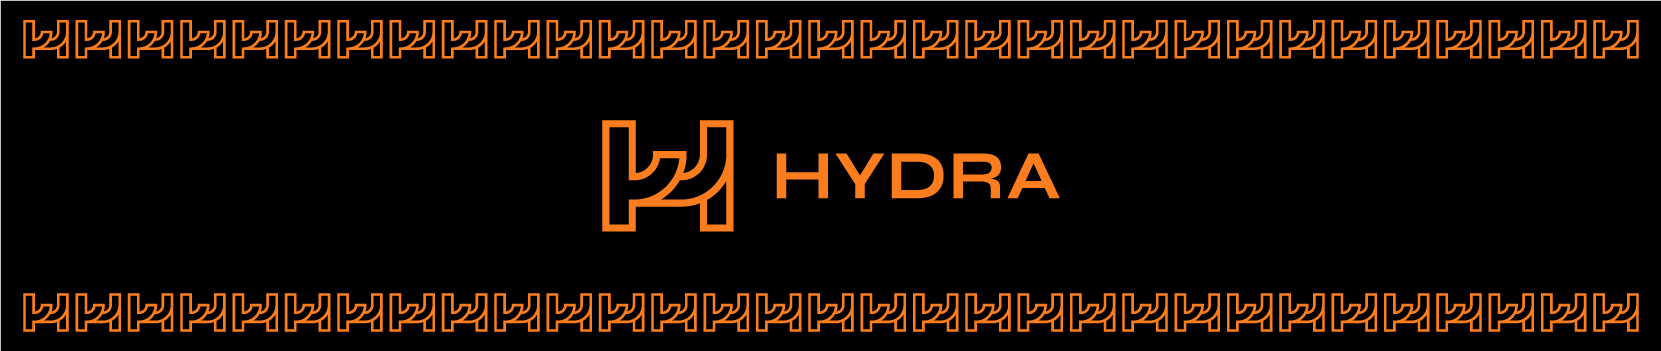 Hydra - the open source data warehouse